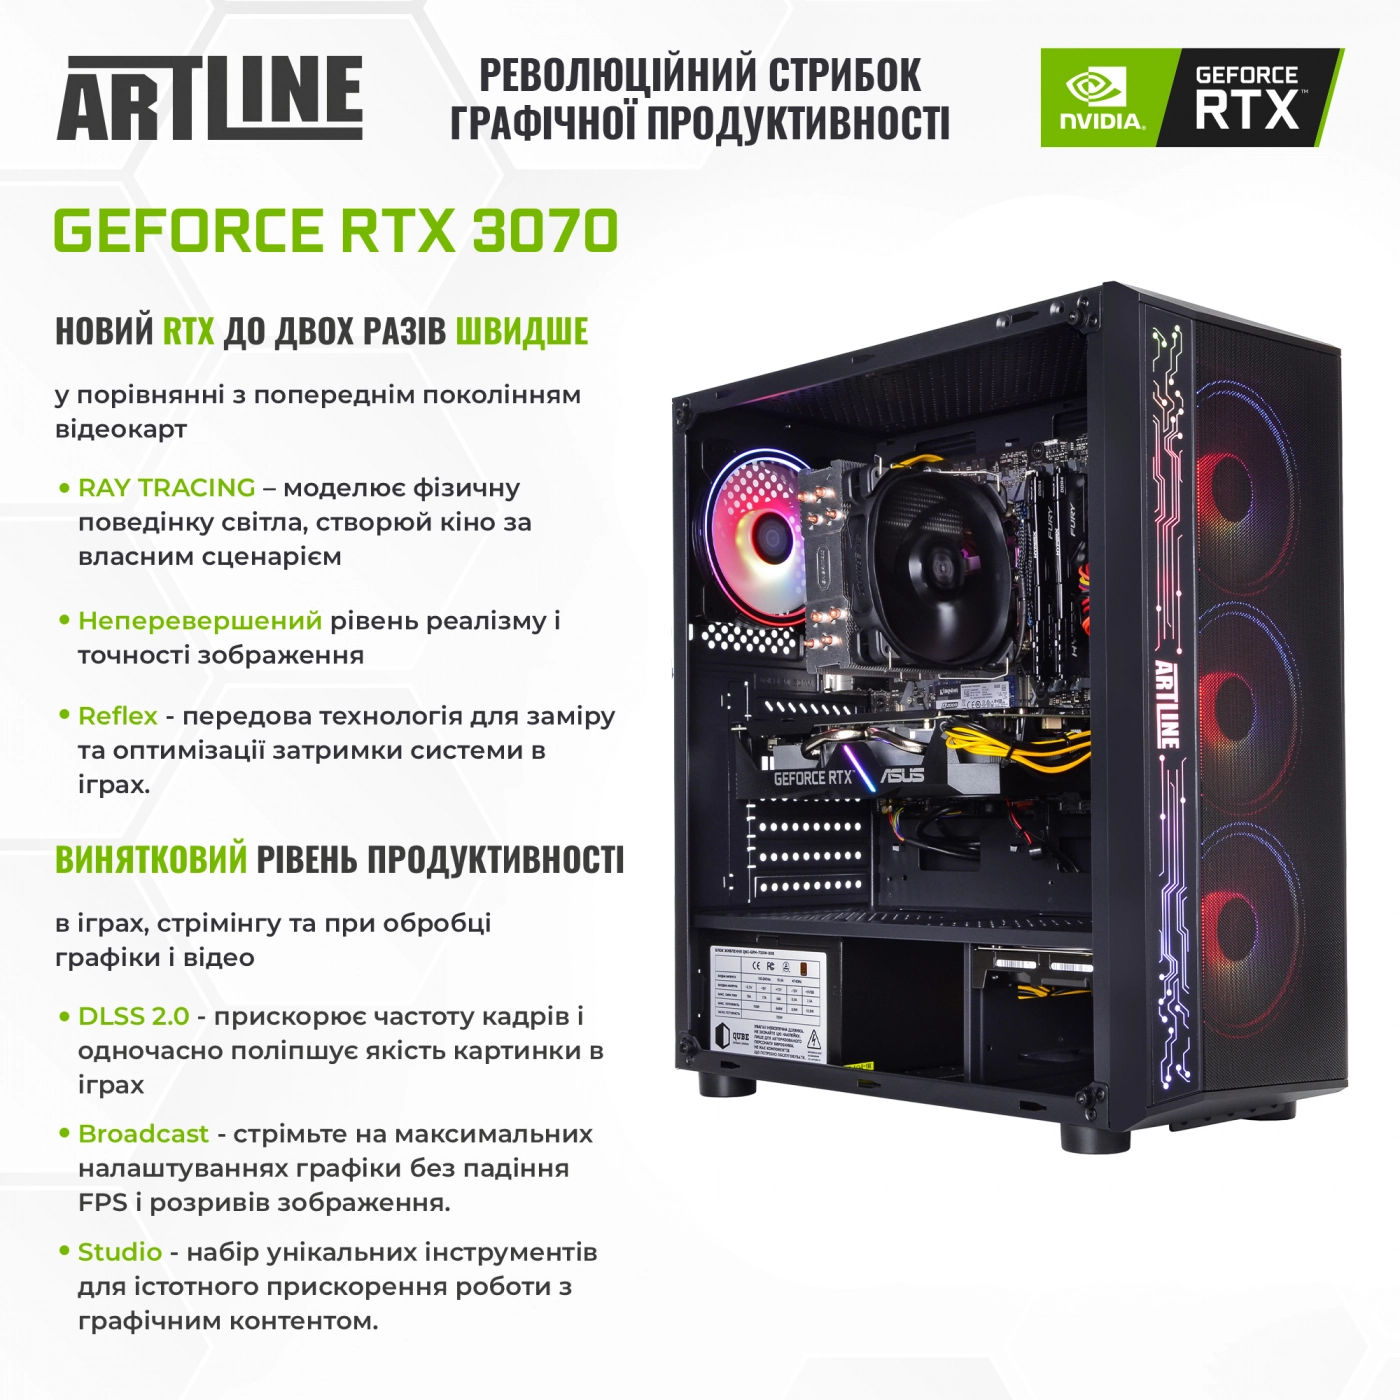 Купити Комп'ютер ARTLINE Gaming X77v38 - фото 12